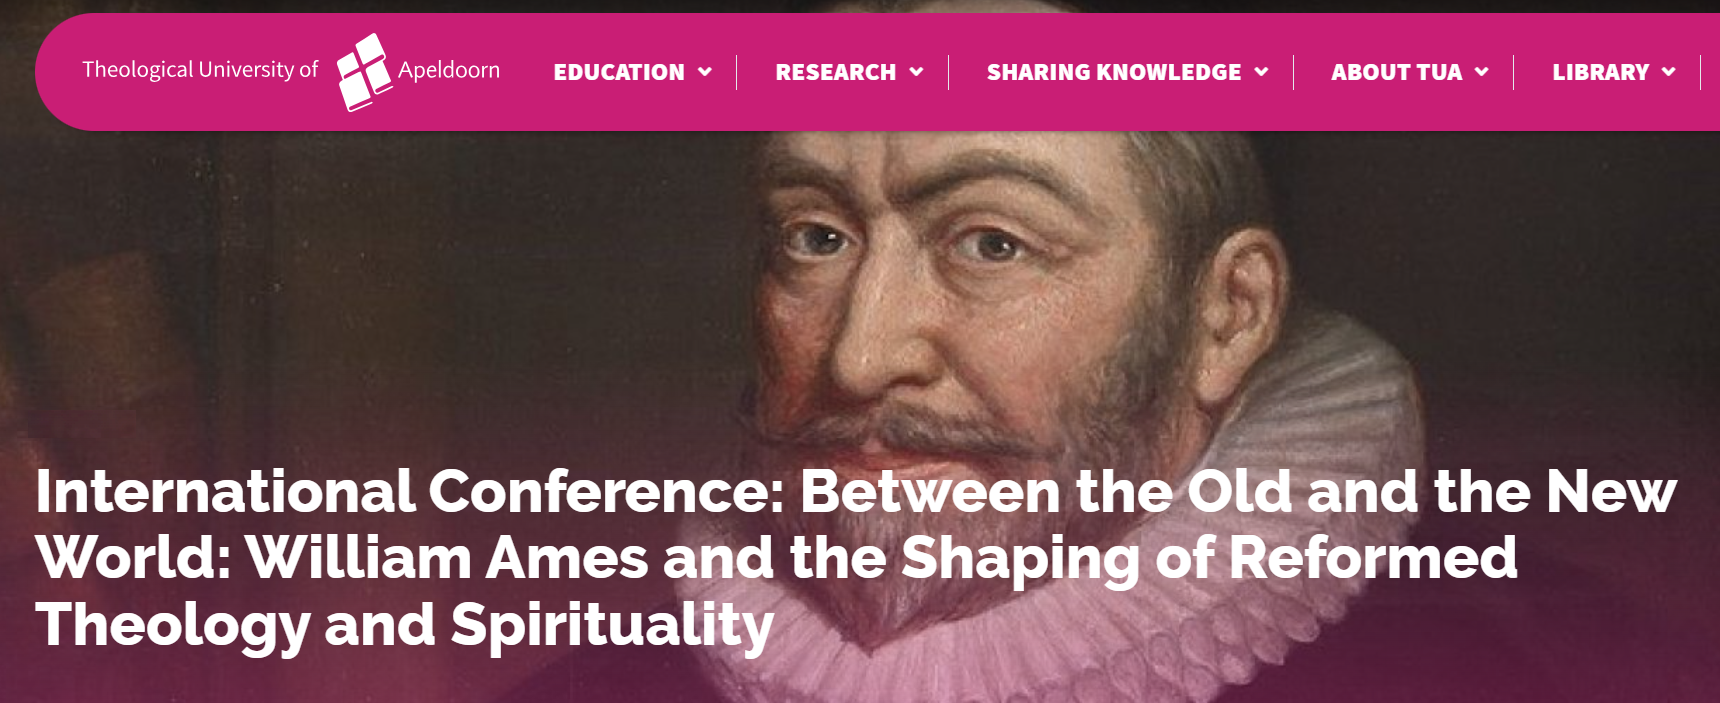 William Ames és a puritanizmus ‒ nemzetközi konferencia